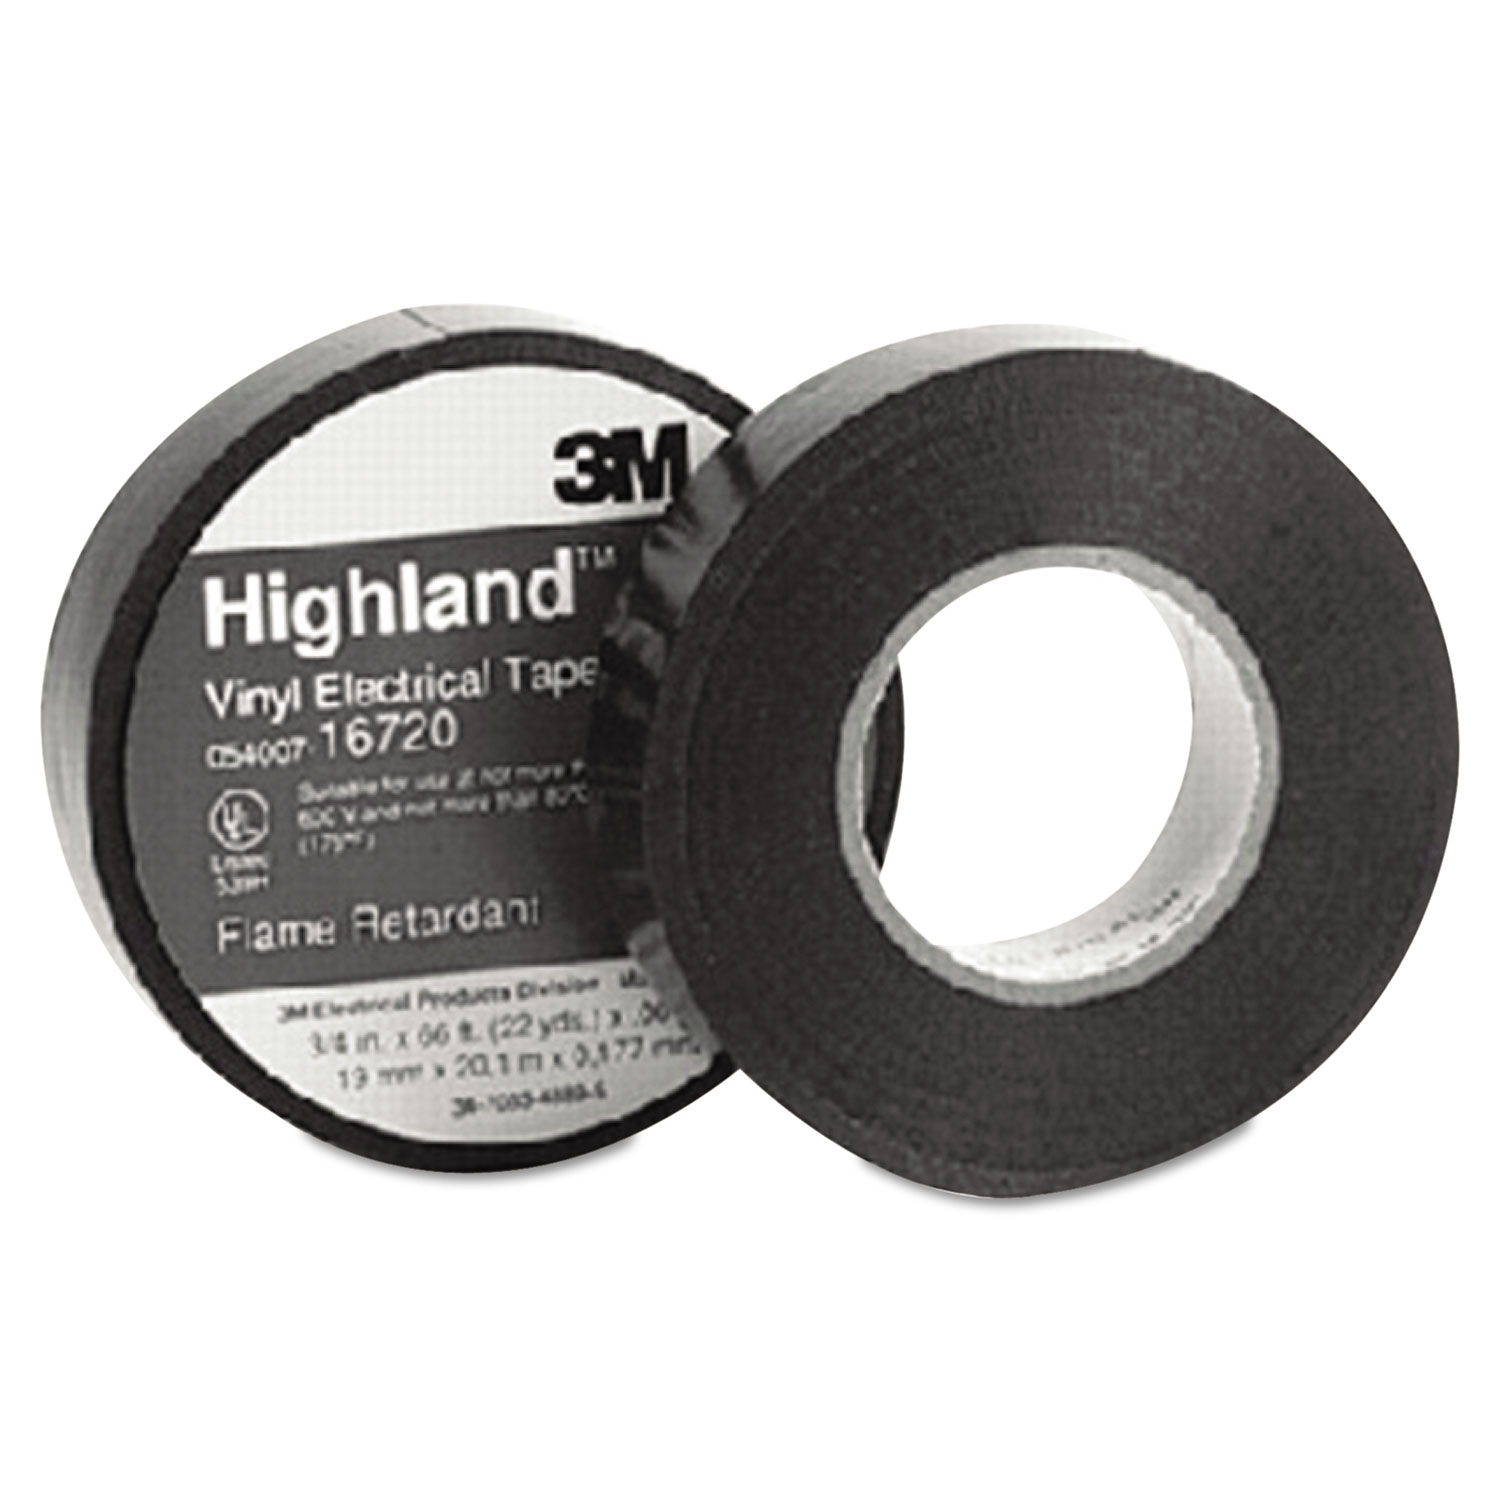  3M 80004000404 Highland Vinyl Commercial Grade Electrical Tape 16720, 0.75 x 66 ft, Black (MMM16720) 